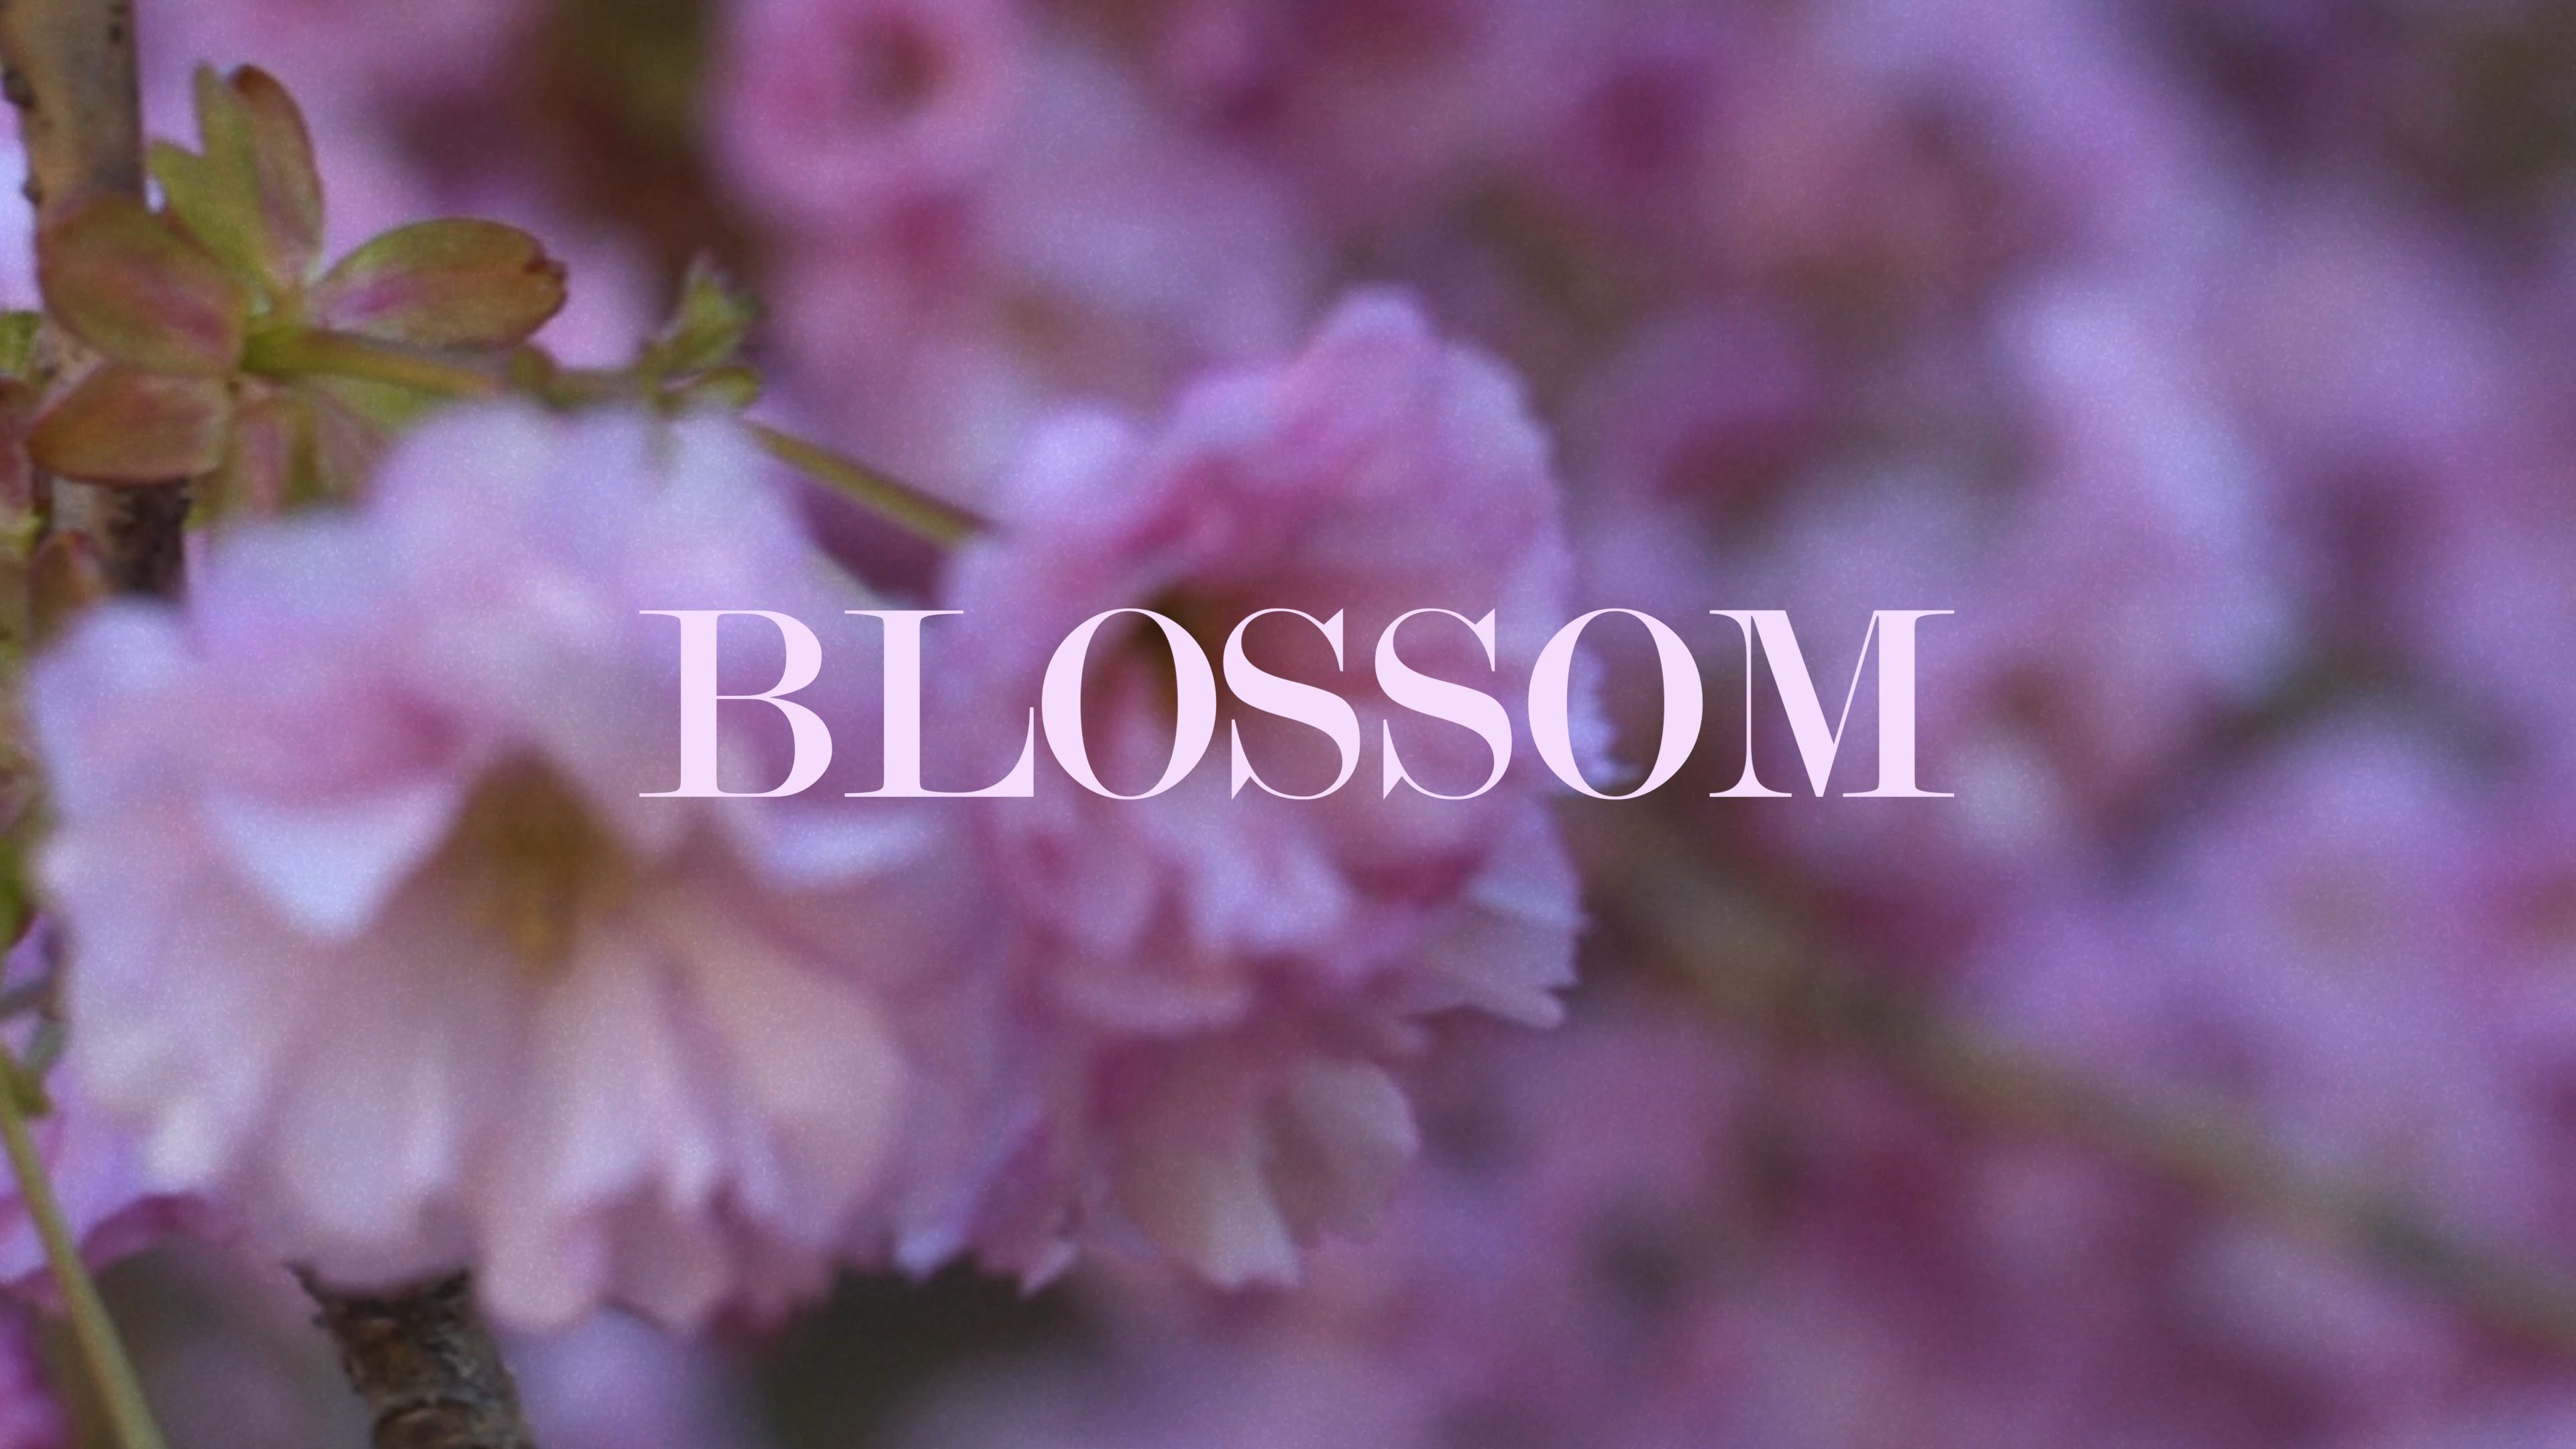 BLOSSOM - BLOSSOM -   21 beauty Aesthetic videos ideas